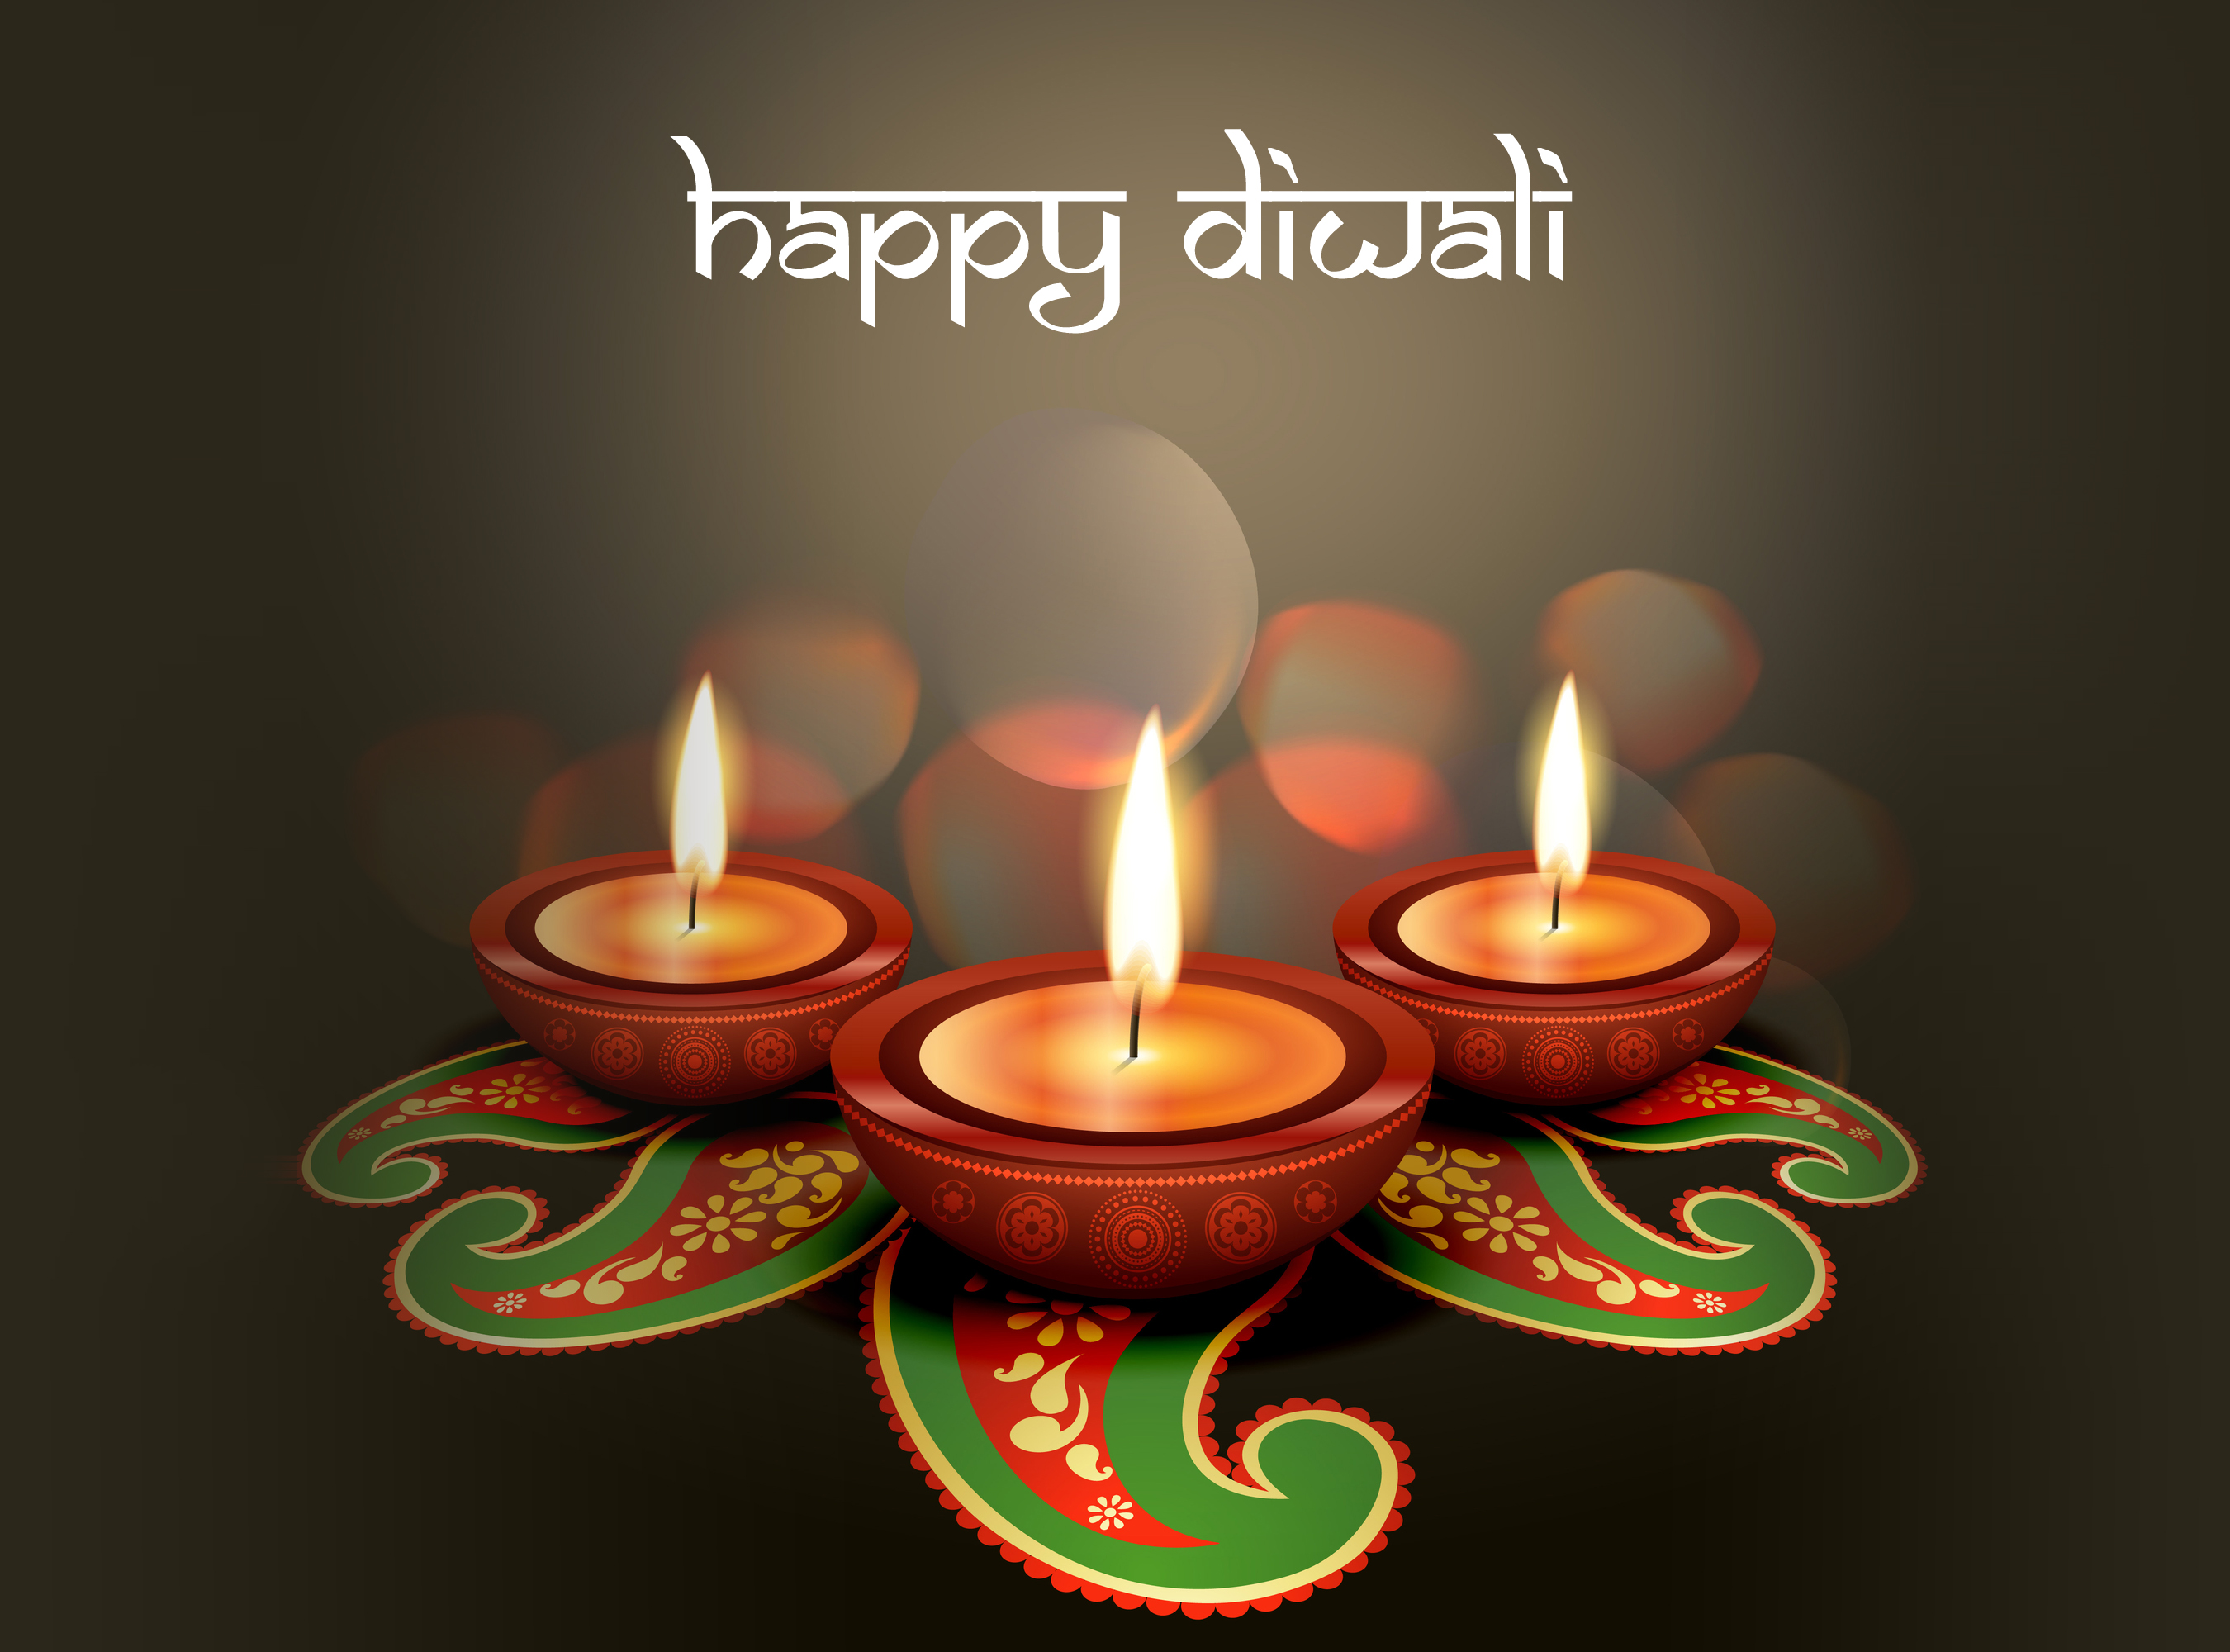 Happy Diwali Image Pictures Photos